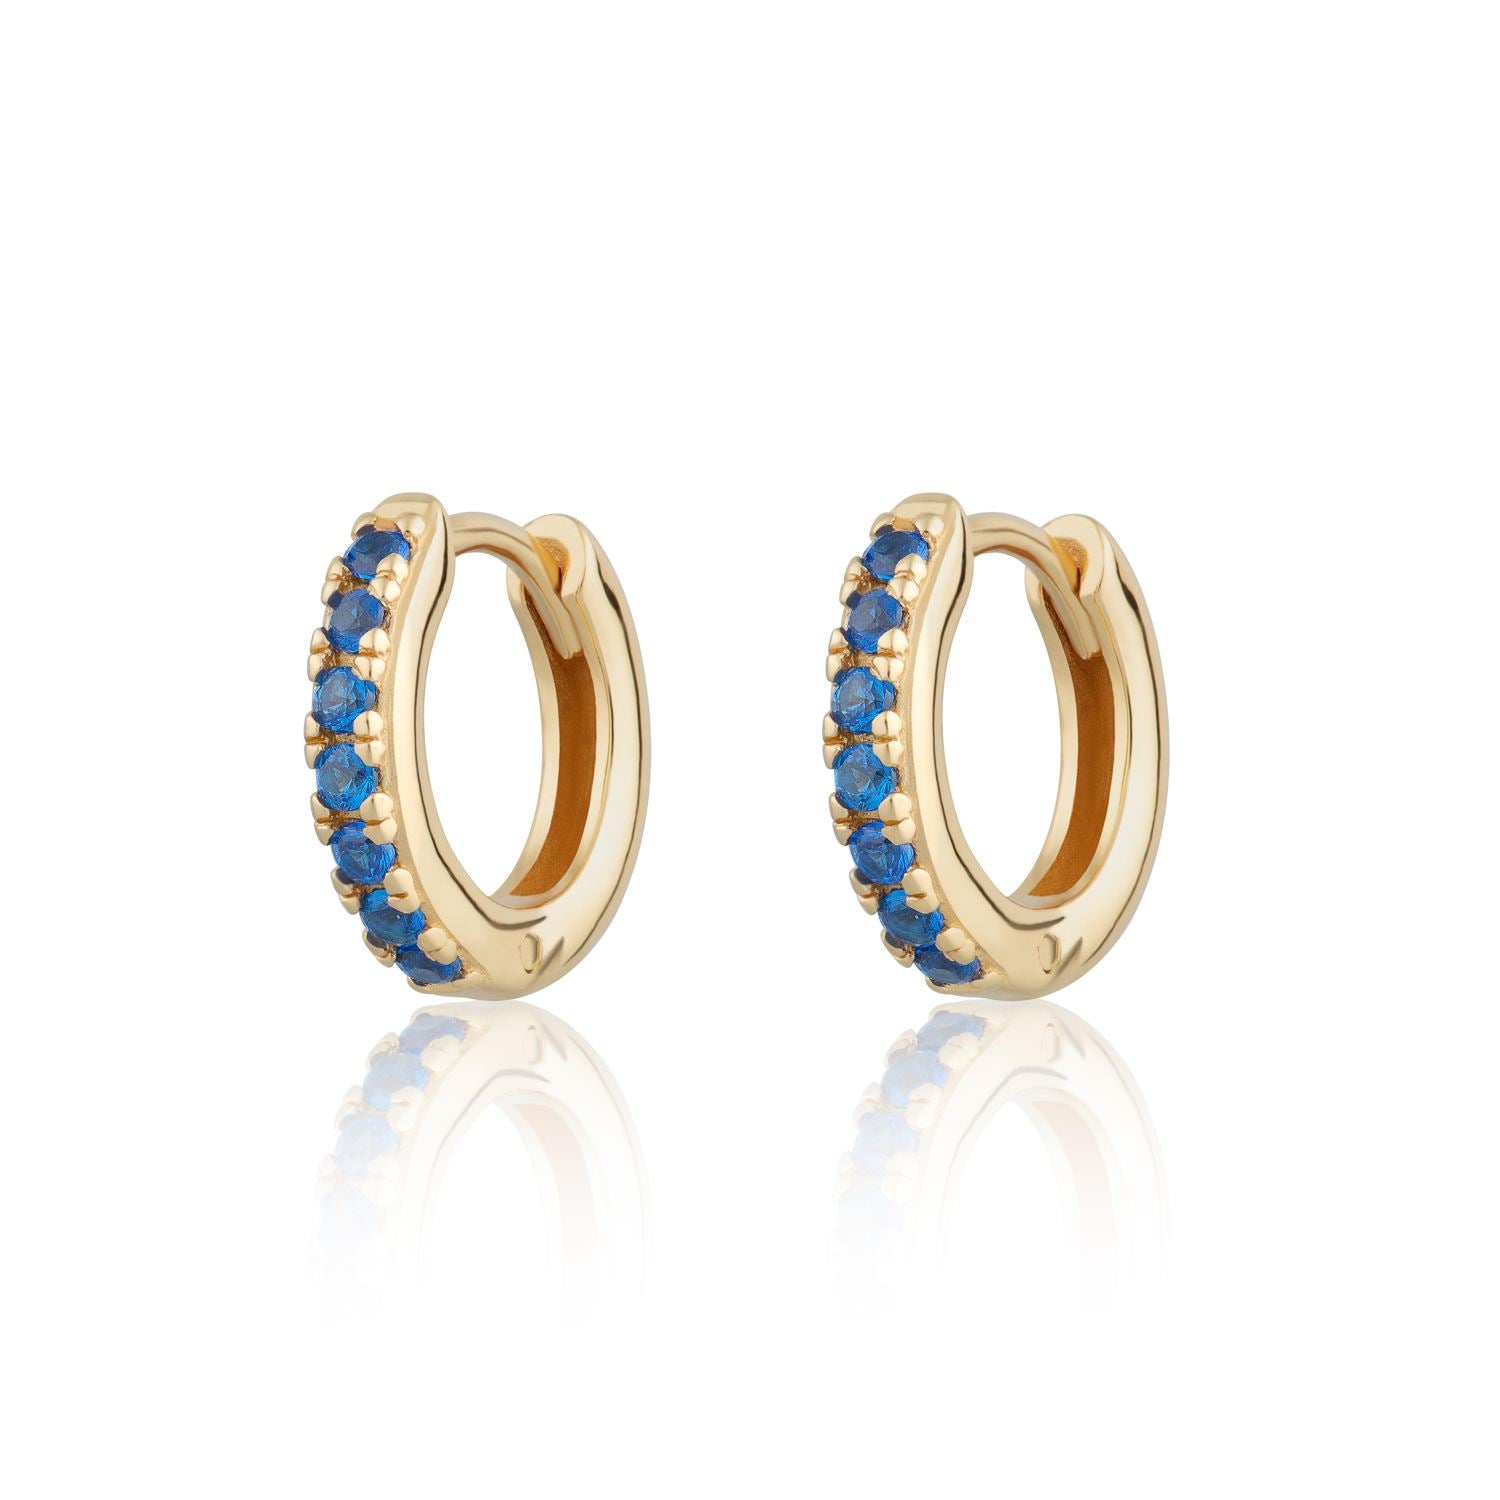  Huggie Earrings with Blue Stones - by Scream Pretty